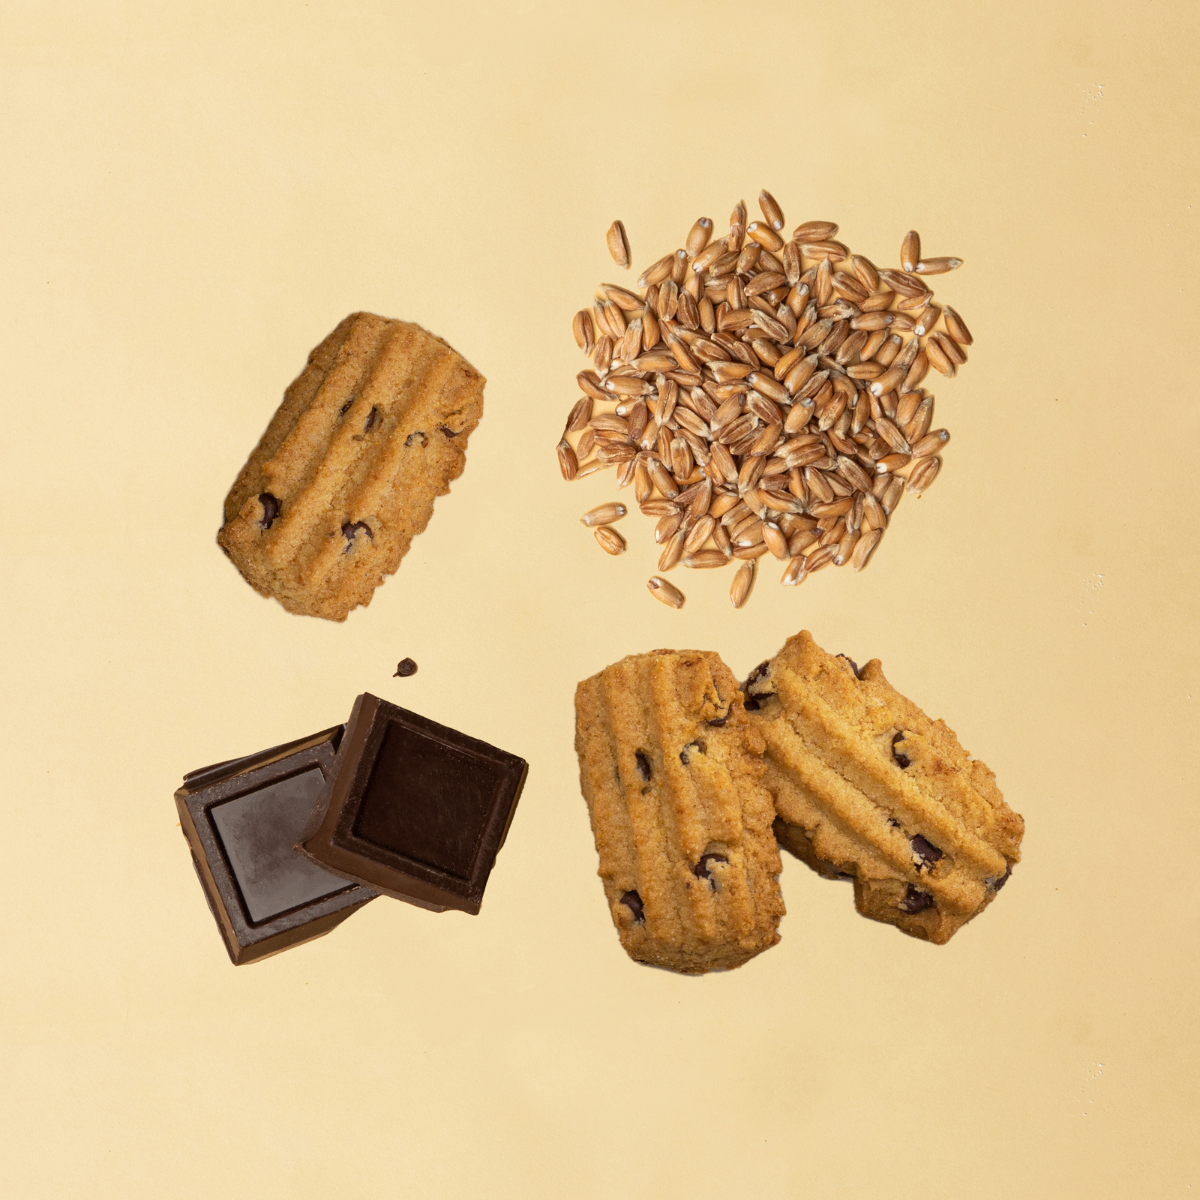 Nugà Hazelnuts & Caramelized Almonds biscuit